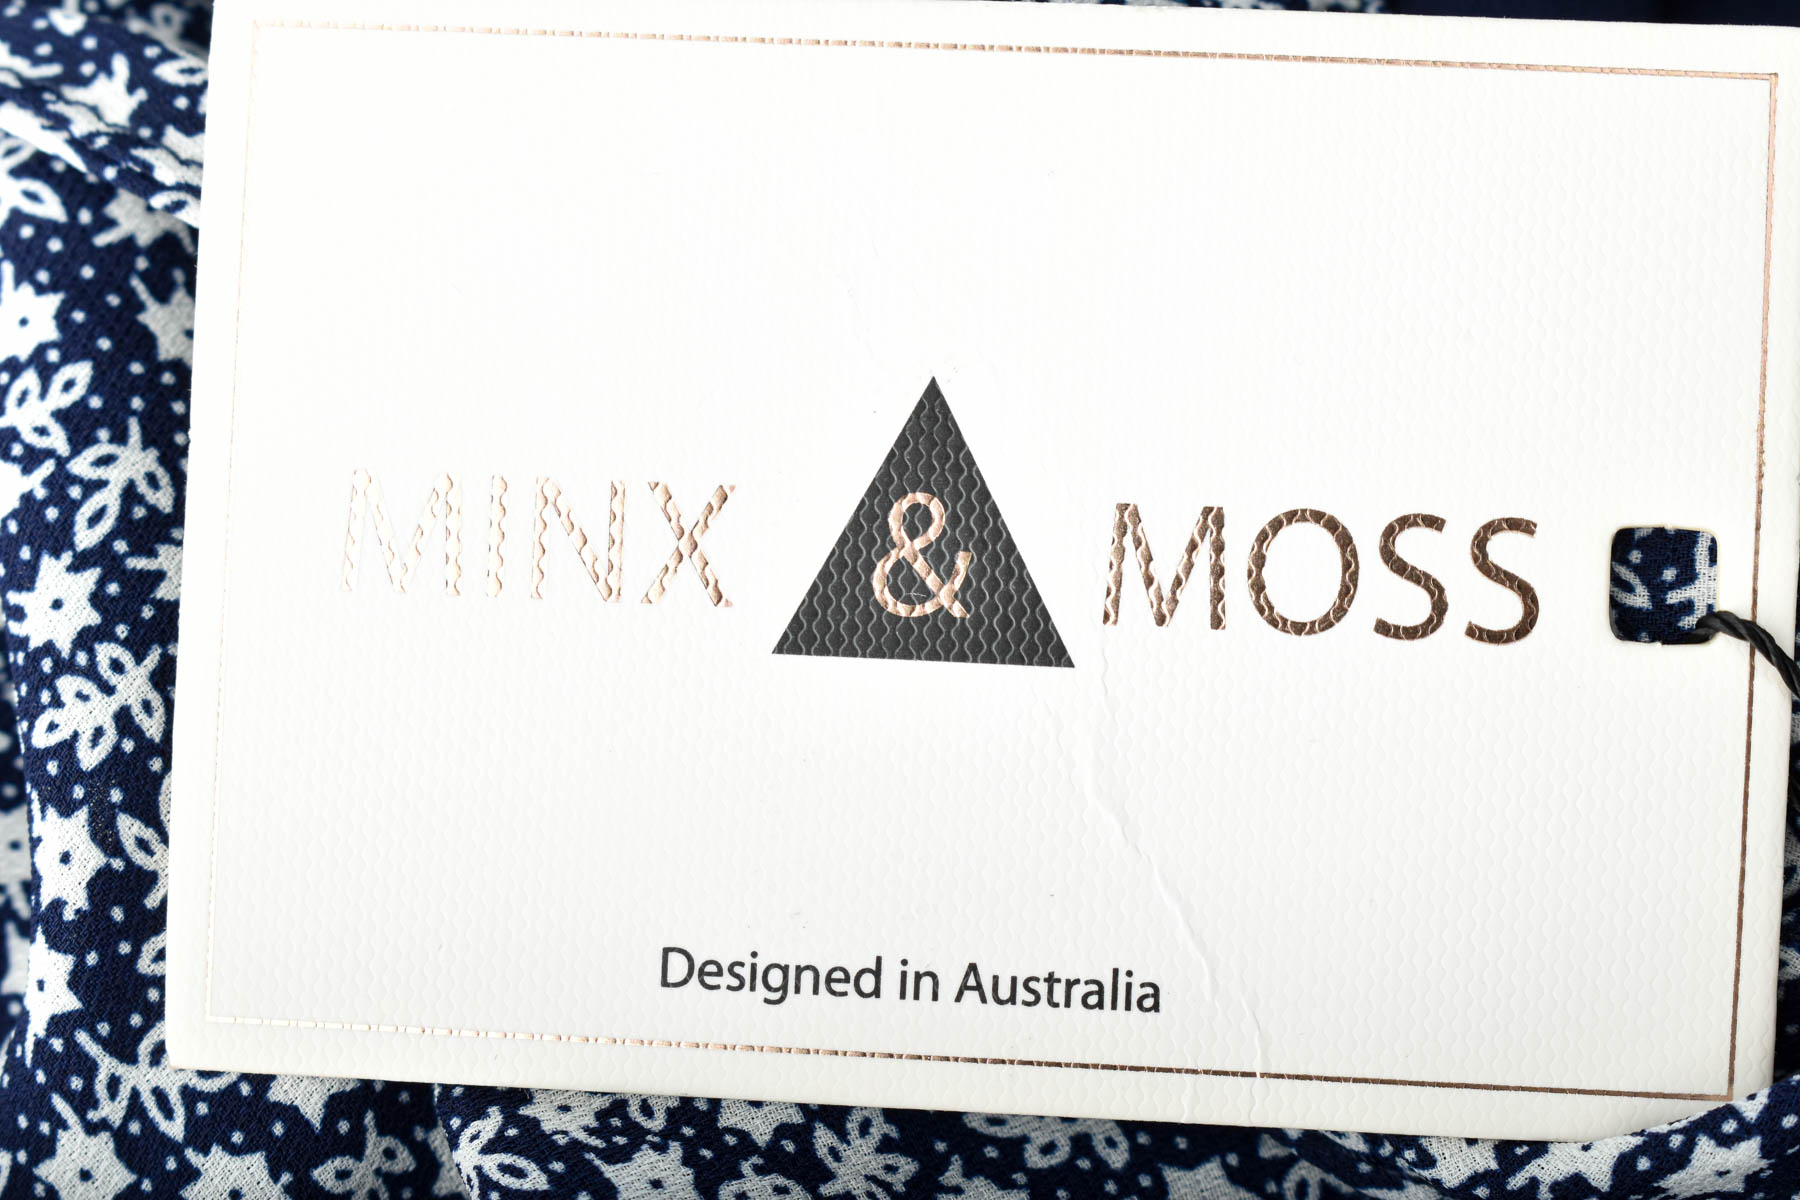 Dress - MINX & MOSS - 2